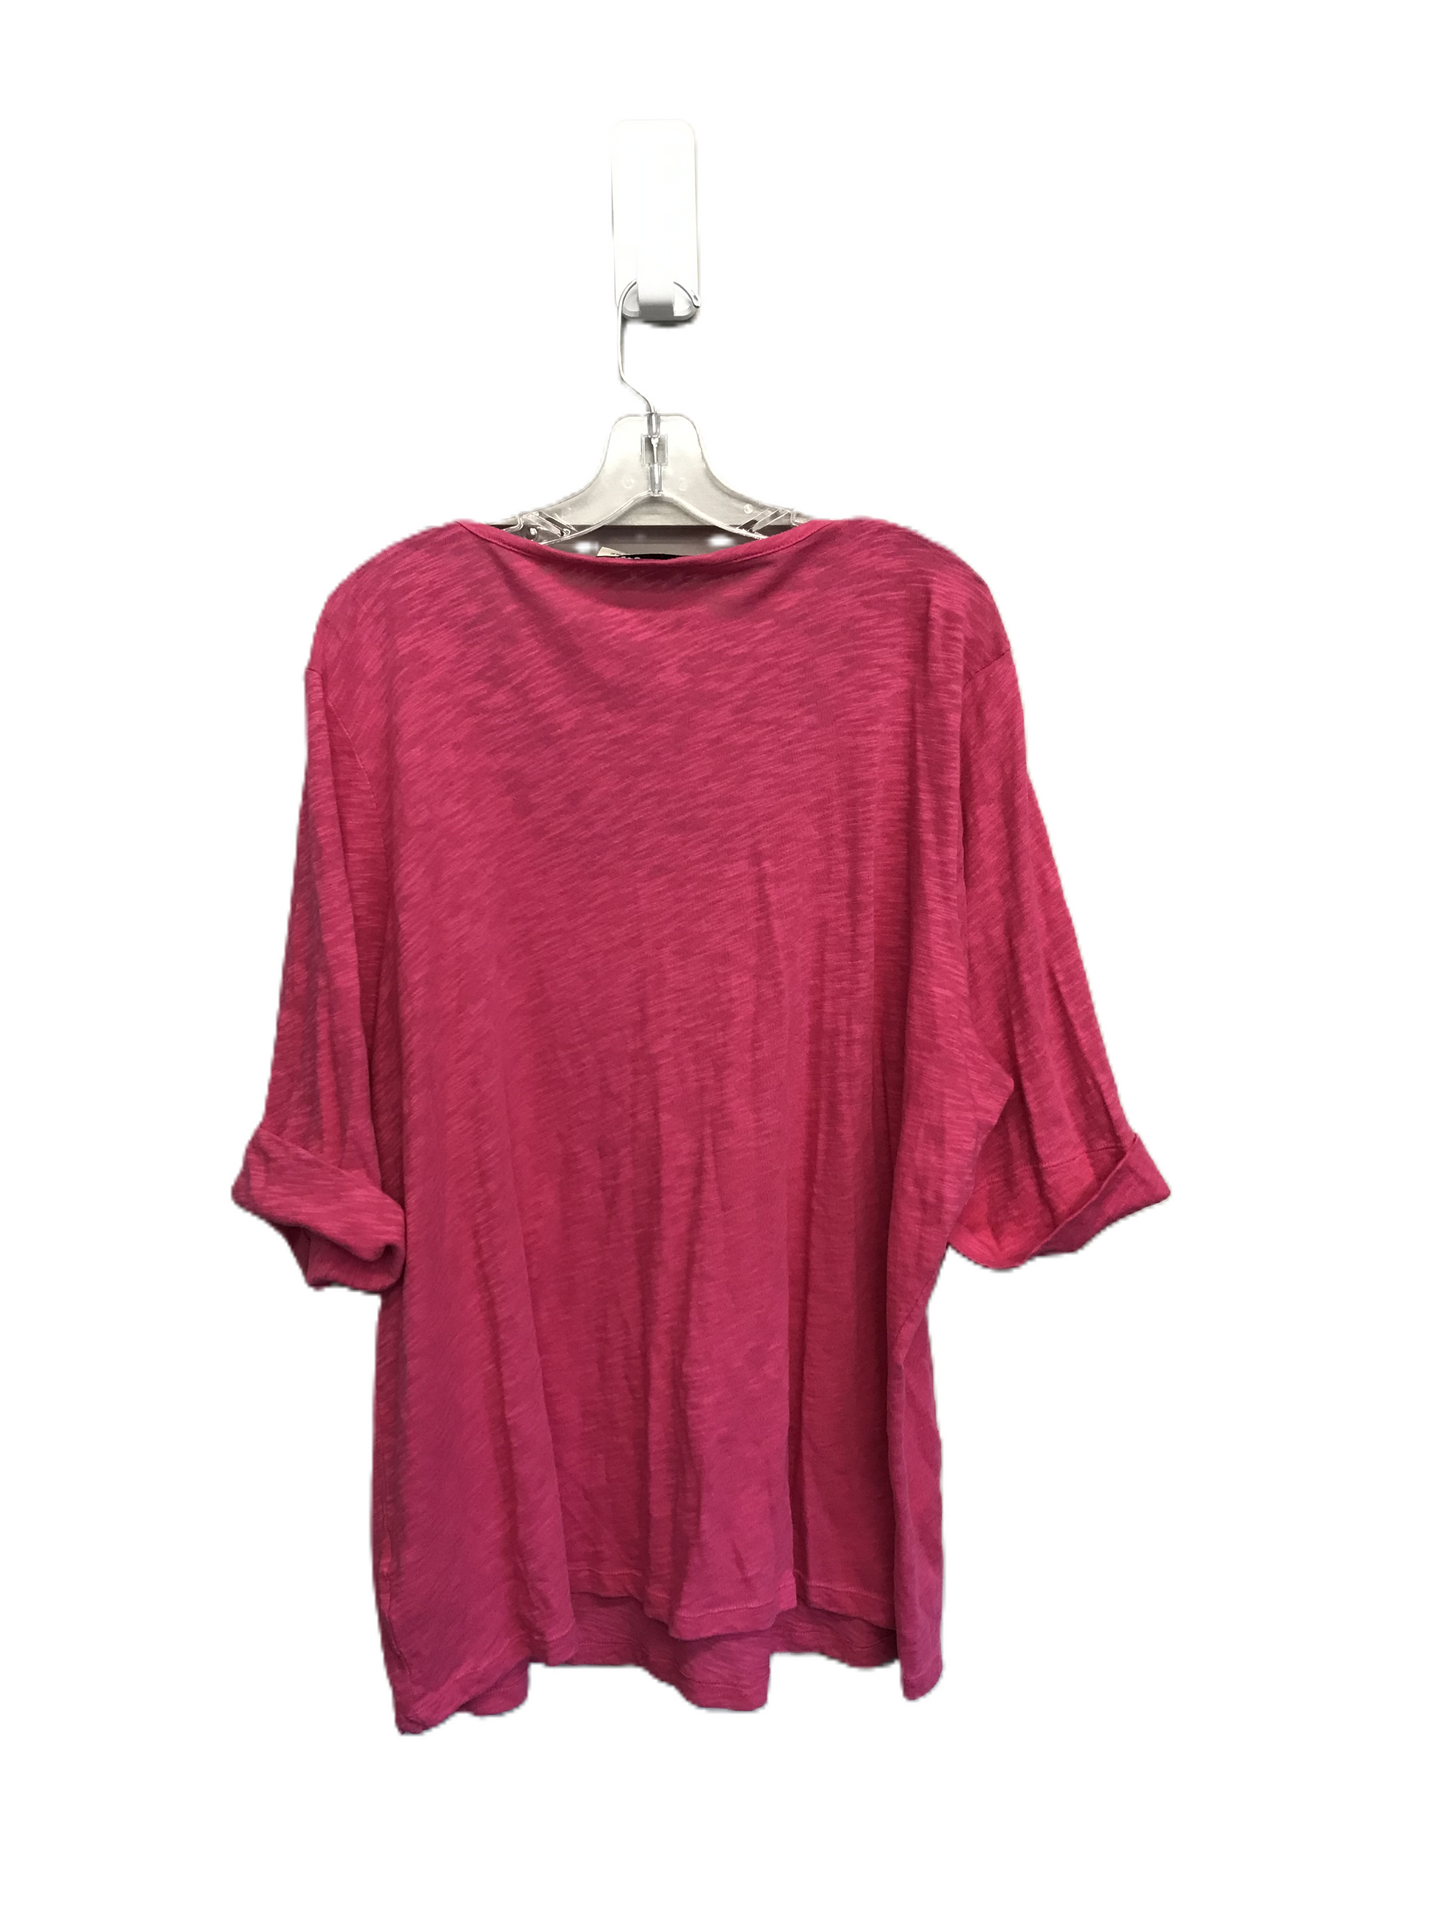 Pink Top Short Sleeve By Jones New York, Size: 3x